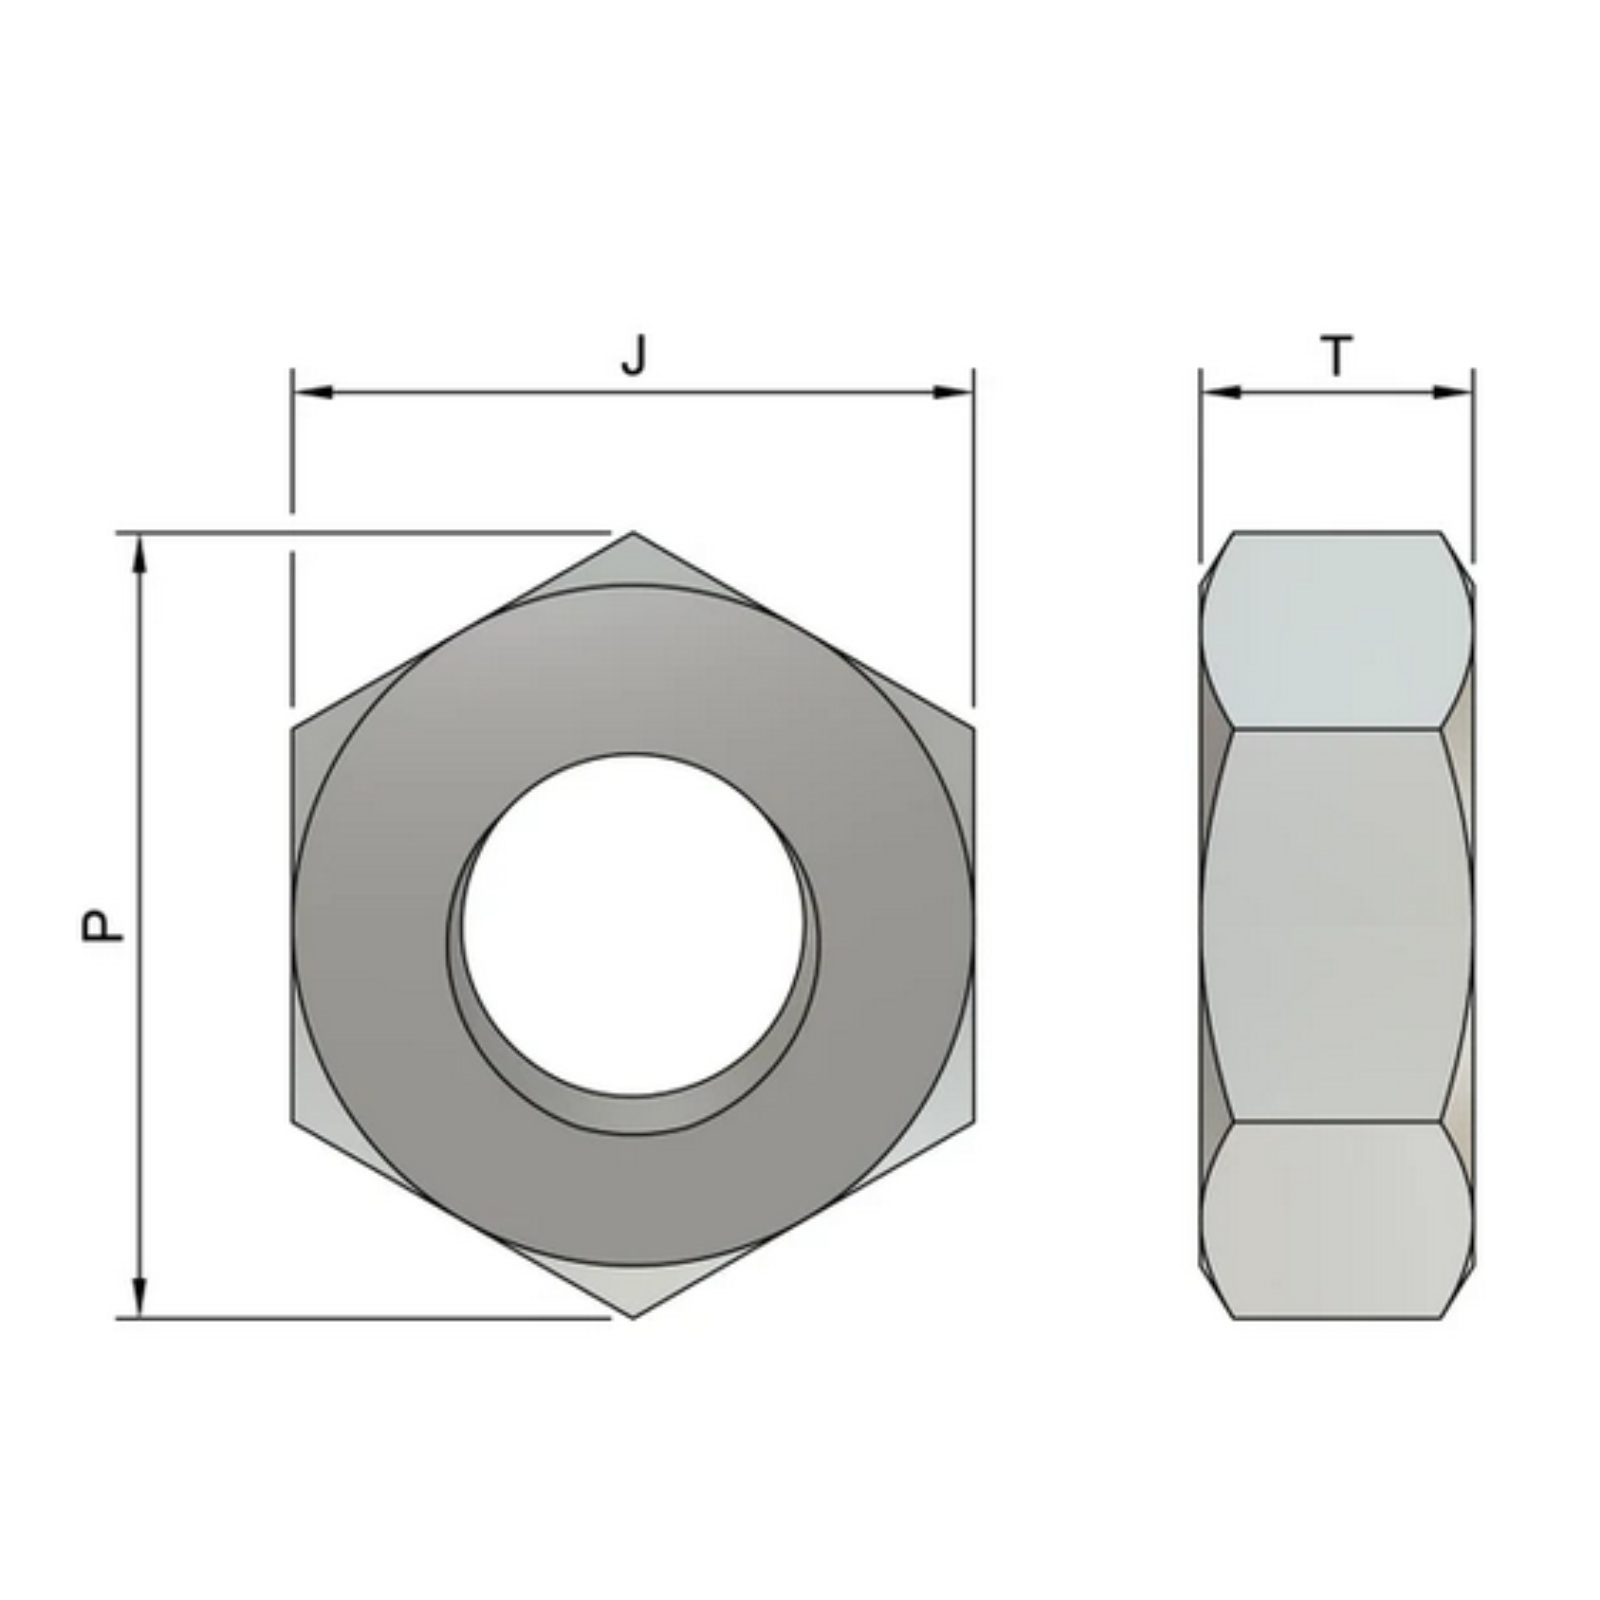 M5 Hexagon Nuts (DIN 934) - Zinc Plated Steel